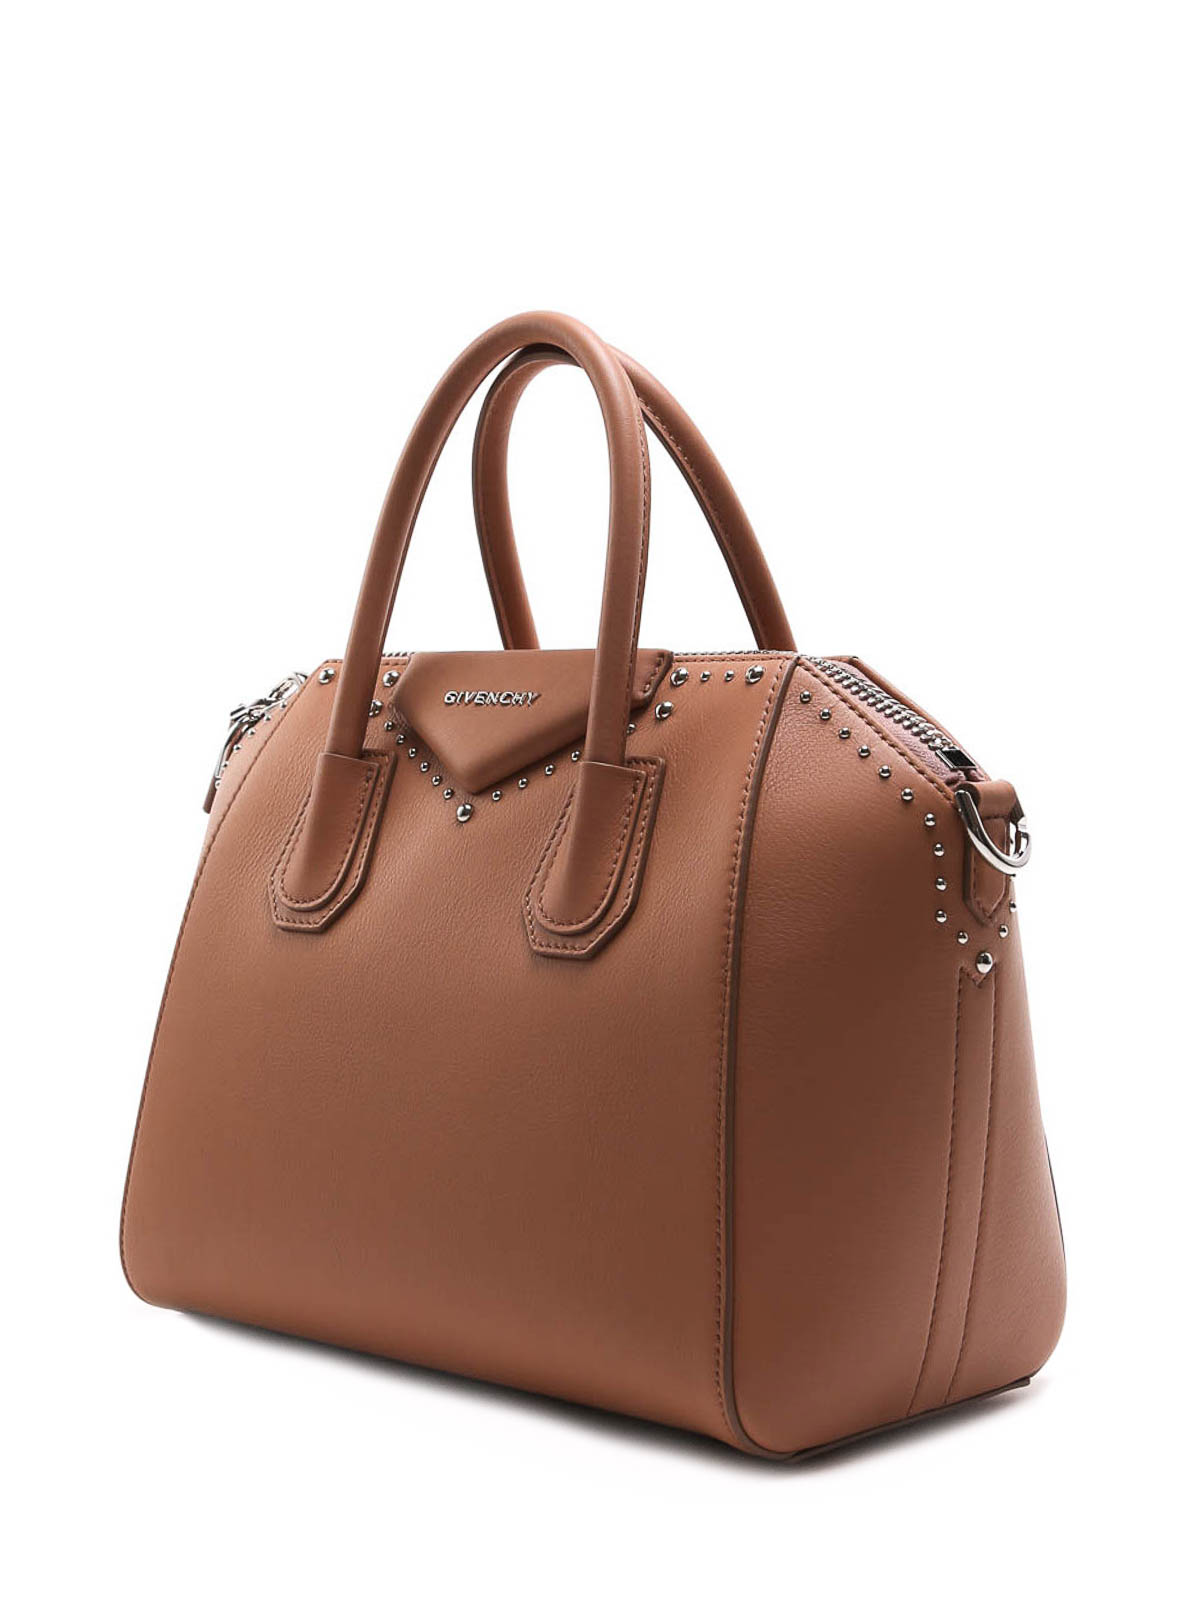 Givenchy Mini Antigona Shoulder Bag in Metallic Leather